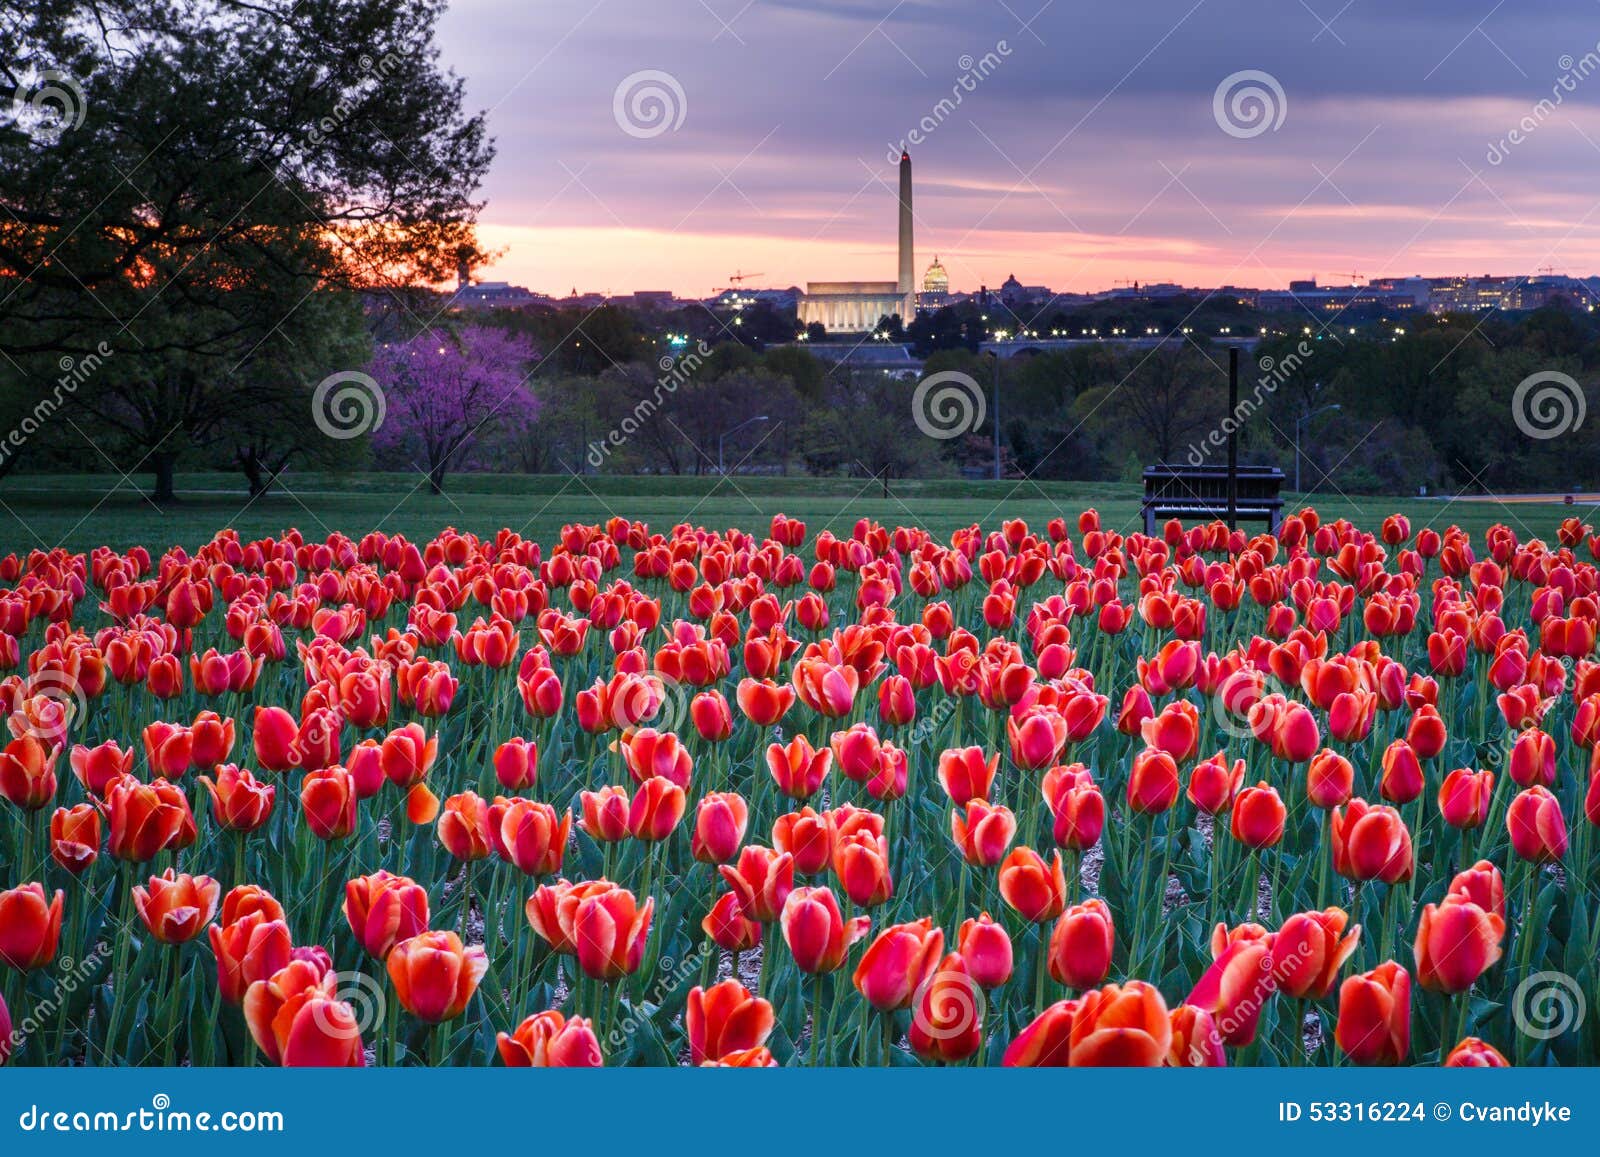 hillside of tulips overlooking washington dc monuments